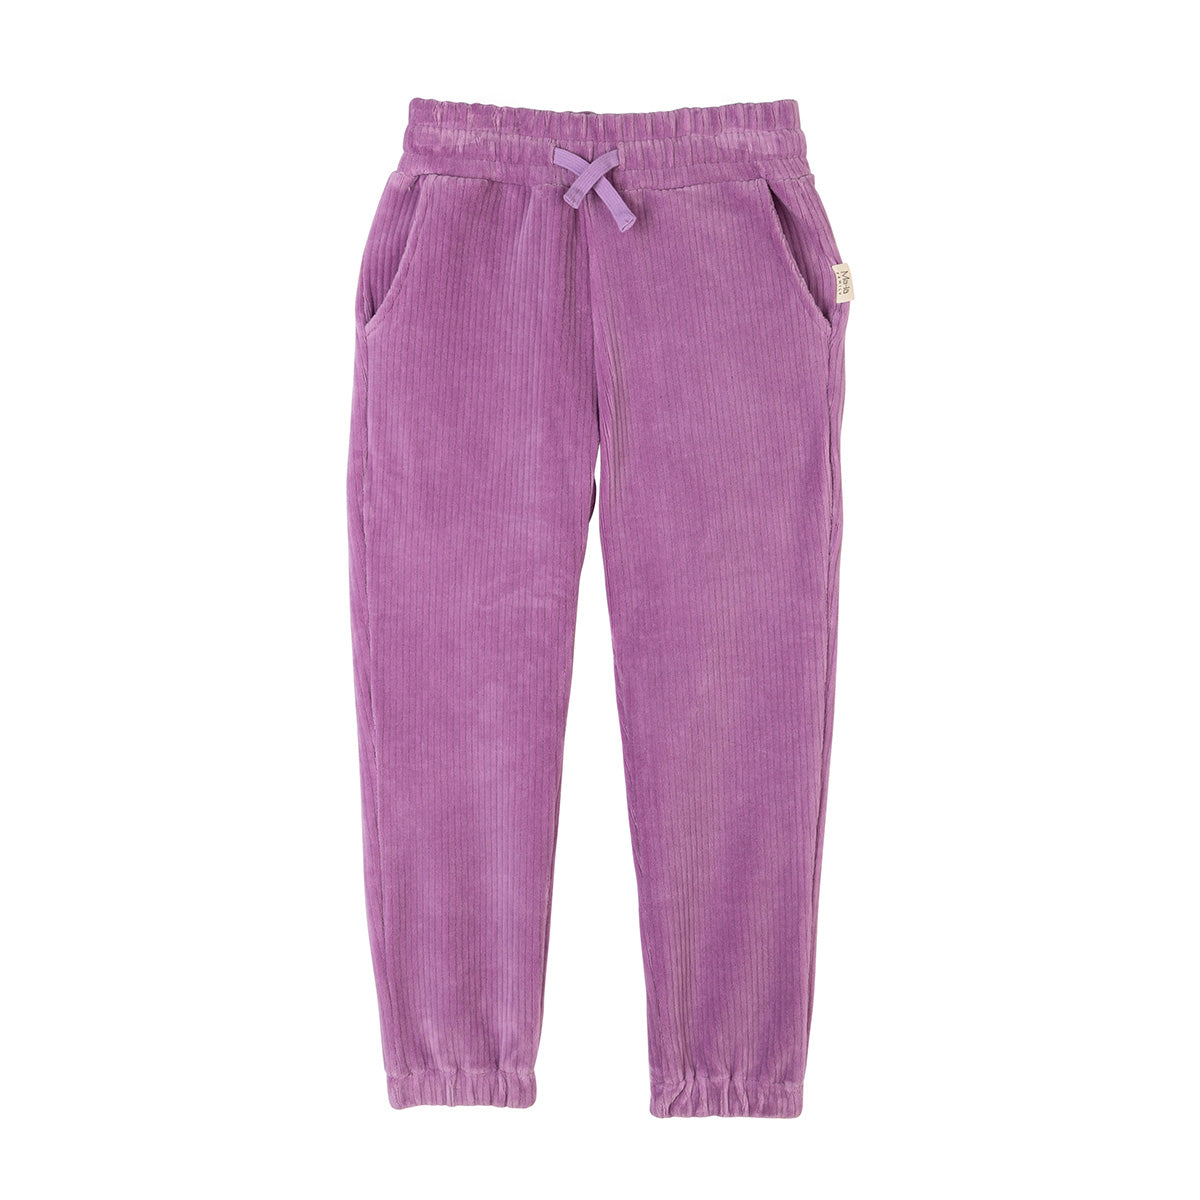 Merri Trousers, purple